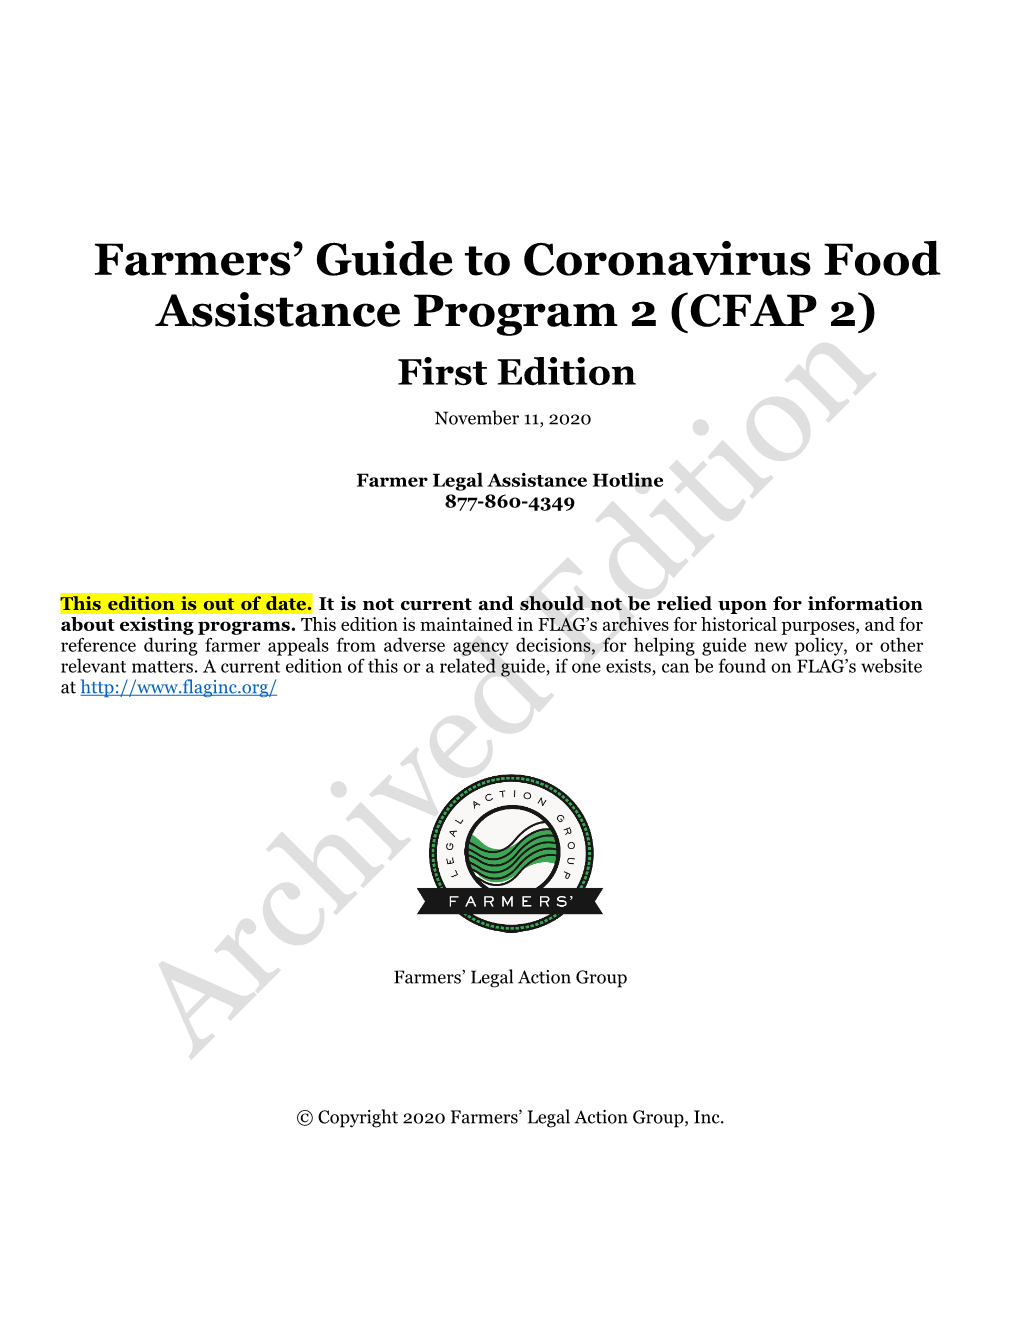 Farmers' Guide to Coronavirus Food Assistance Program 2